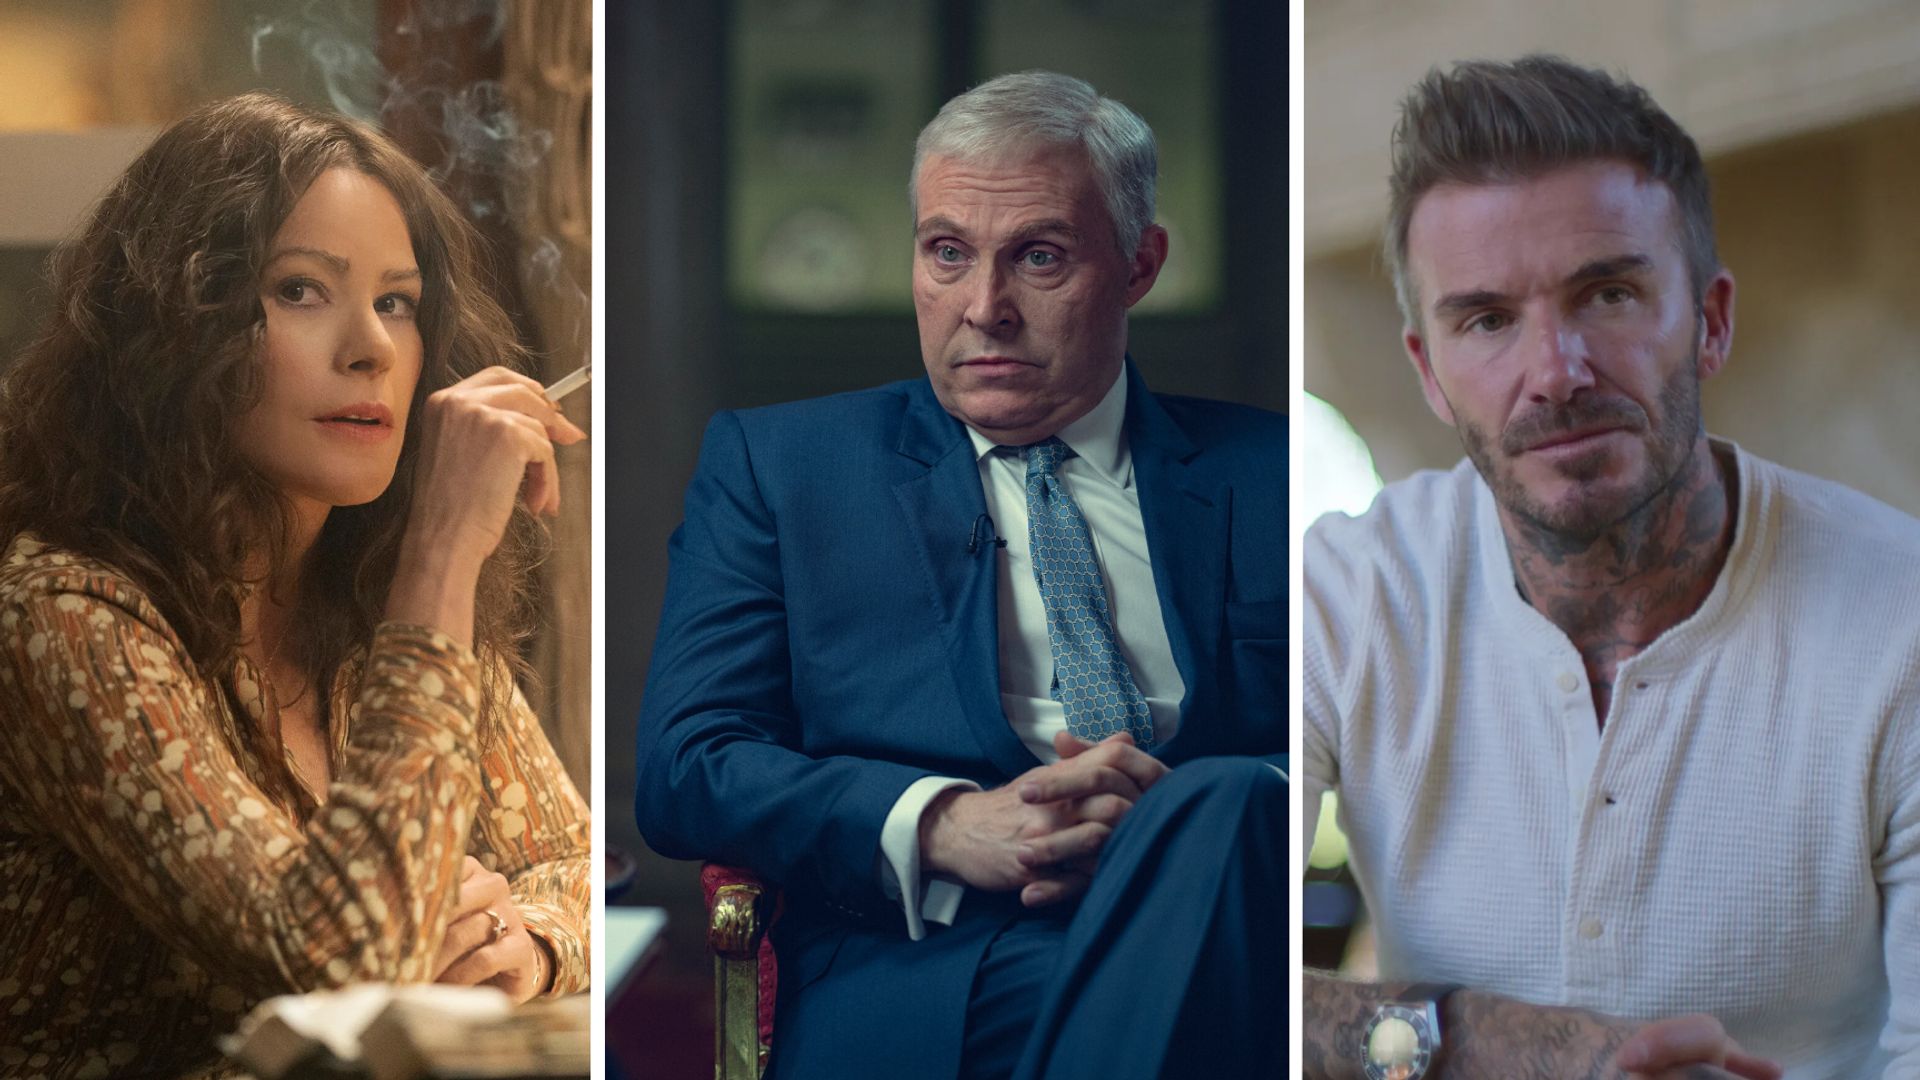 Prince Andrew movie Scoop, David Beckham documentary and Sofia Vergara top Emmys nominations